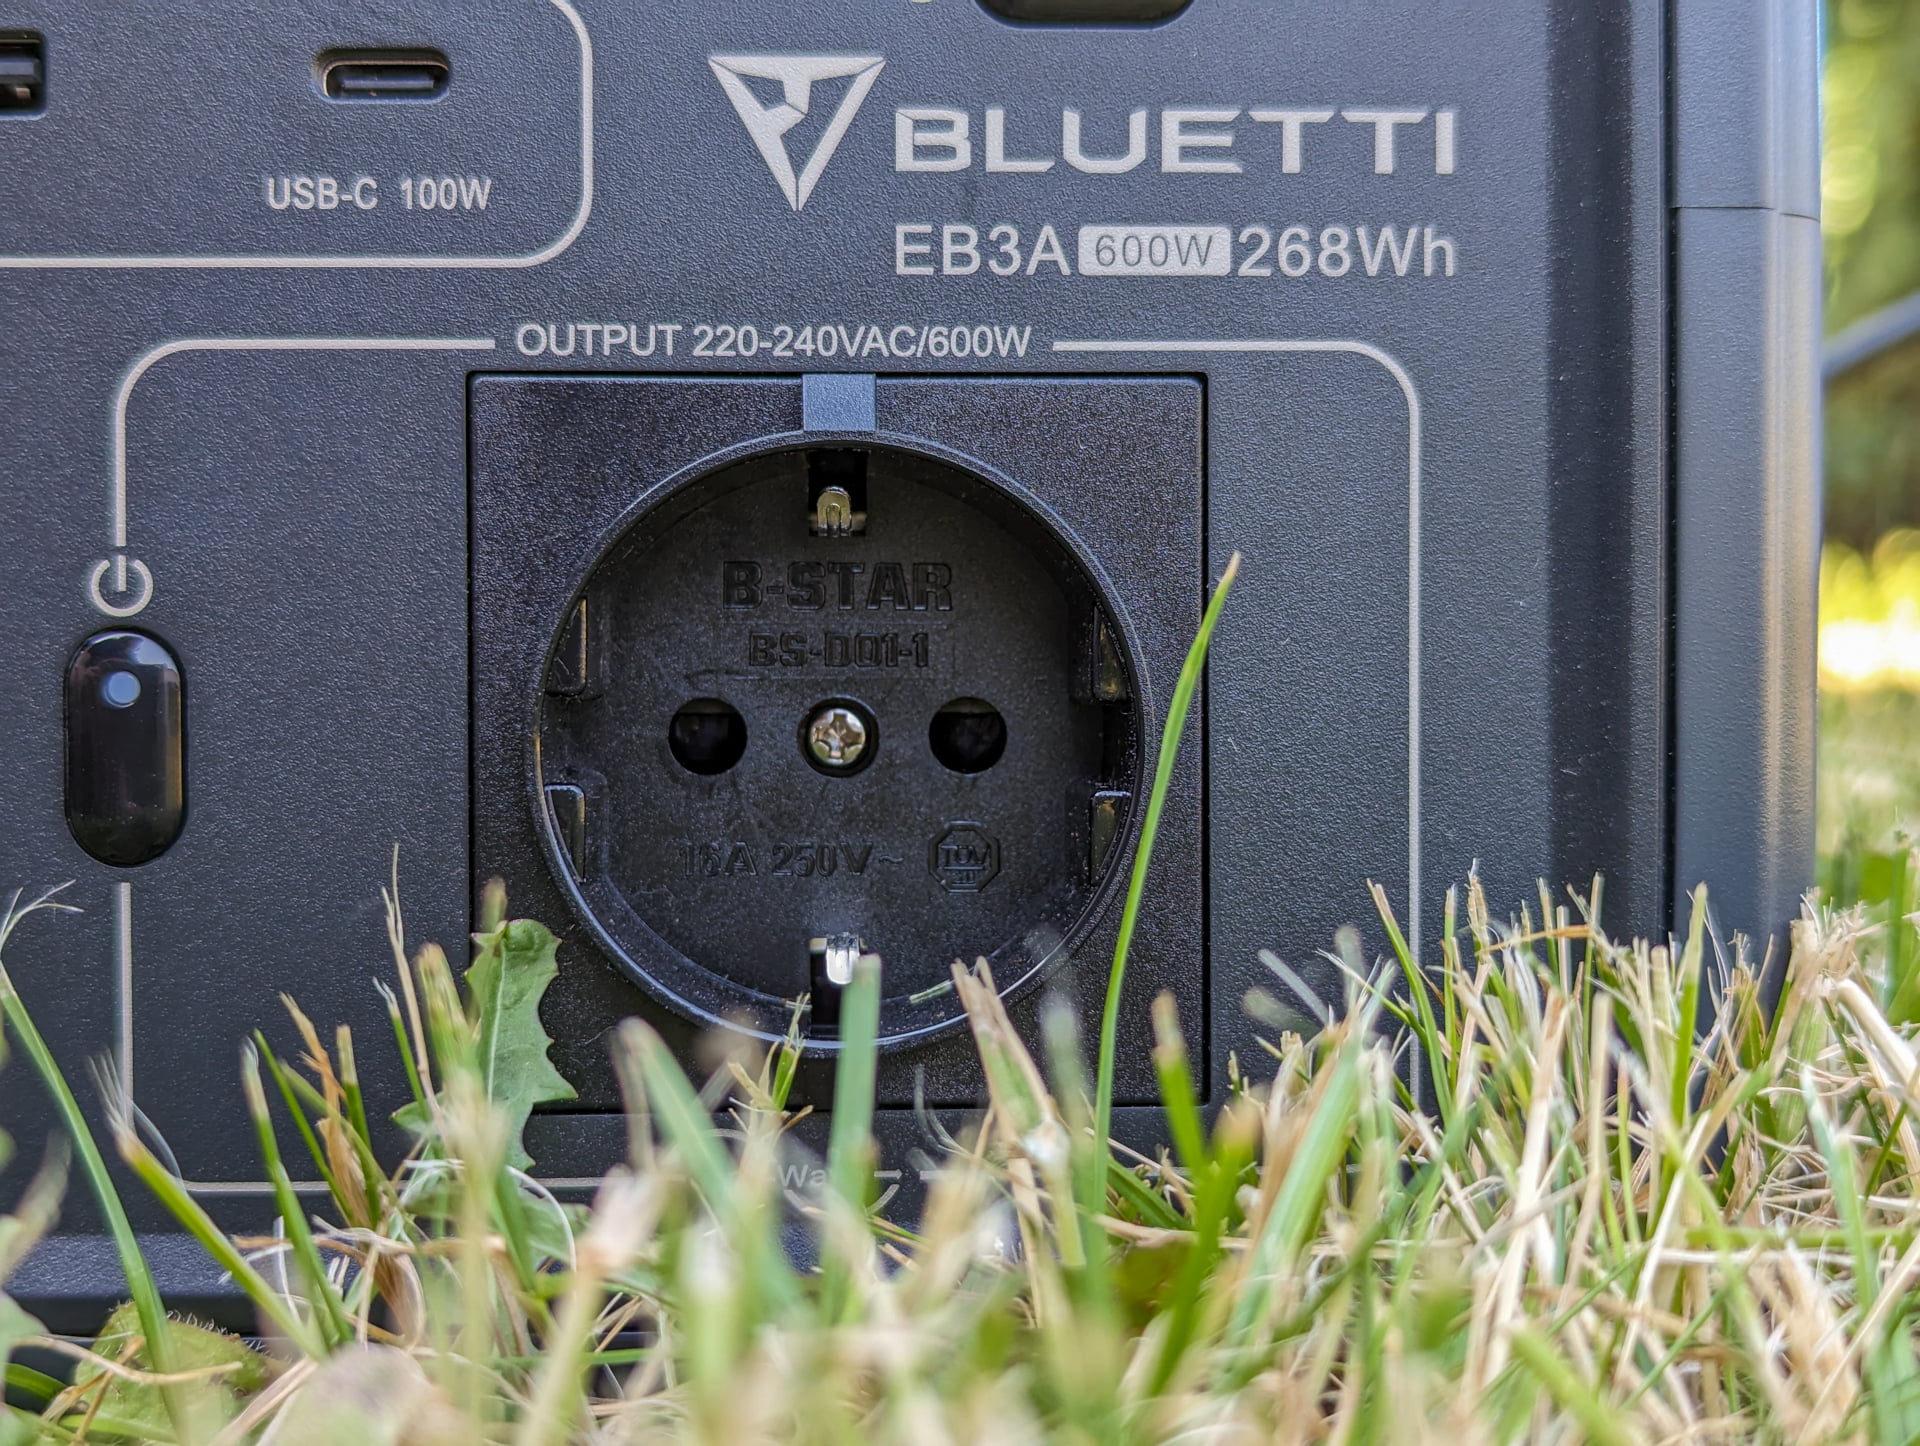 Bluetti's EB3A generator encapsulates smart power management